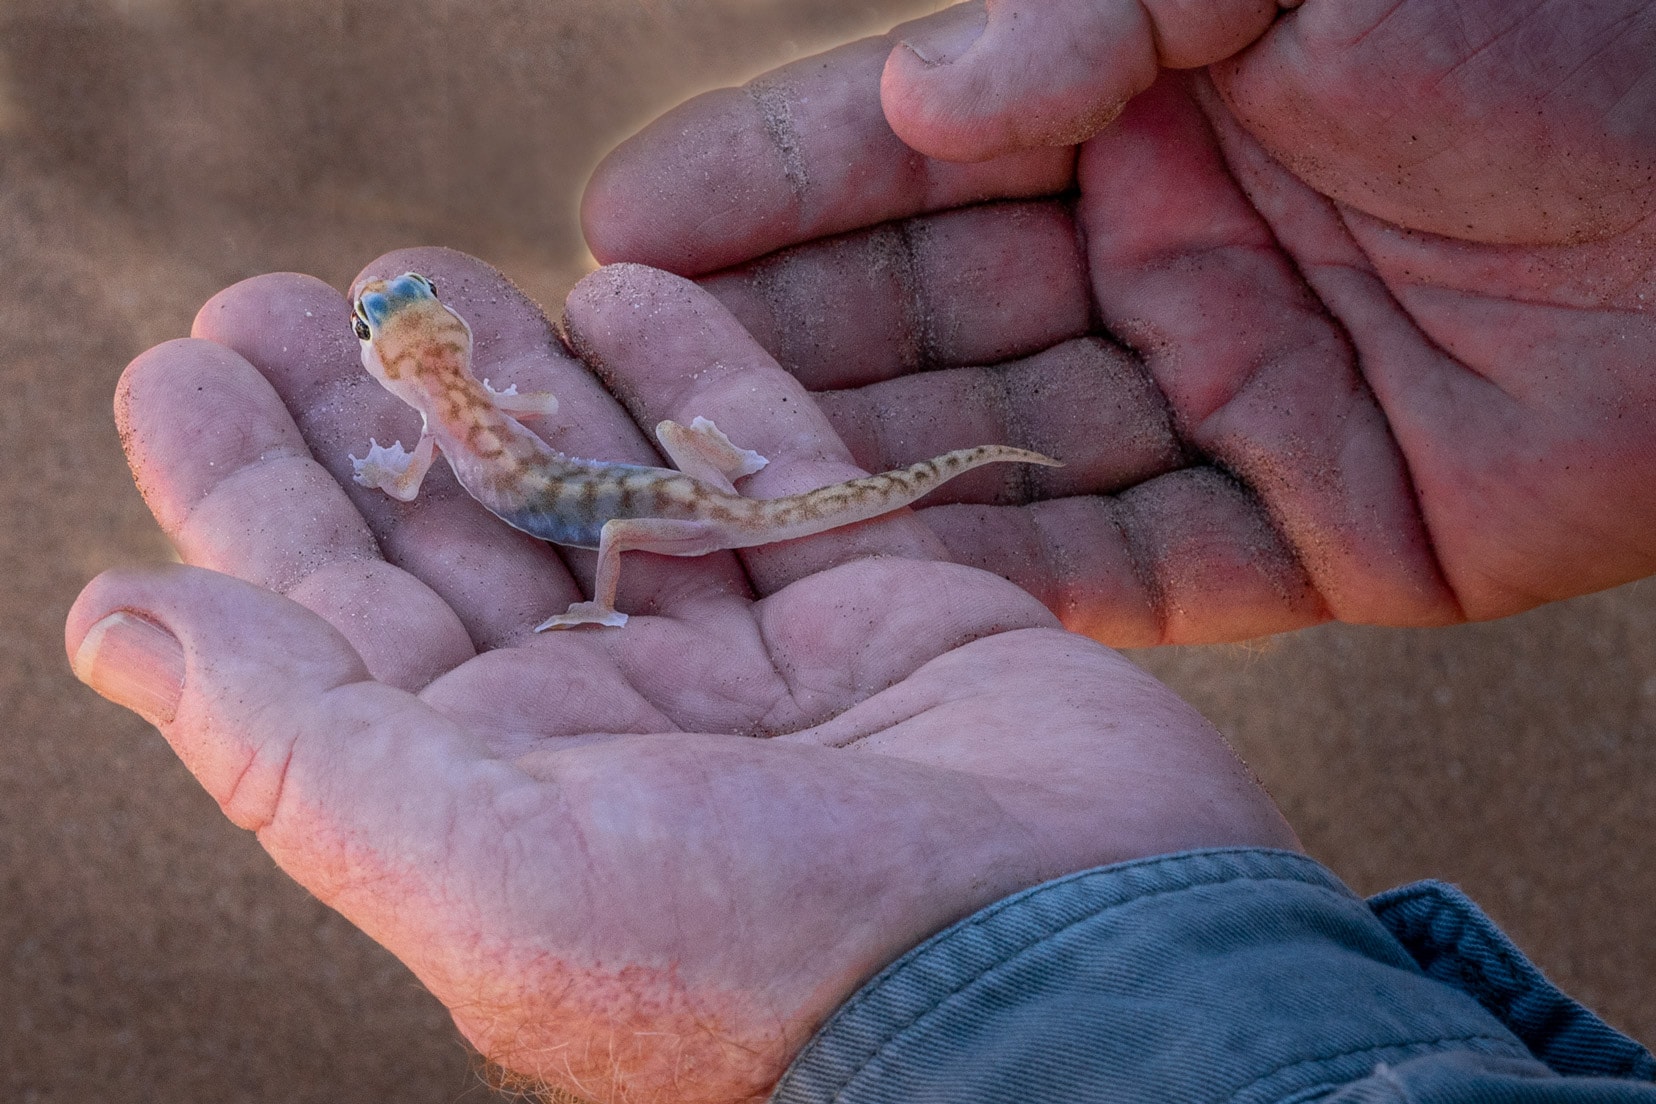 desert-gecko-in-palm-of-hand